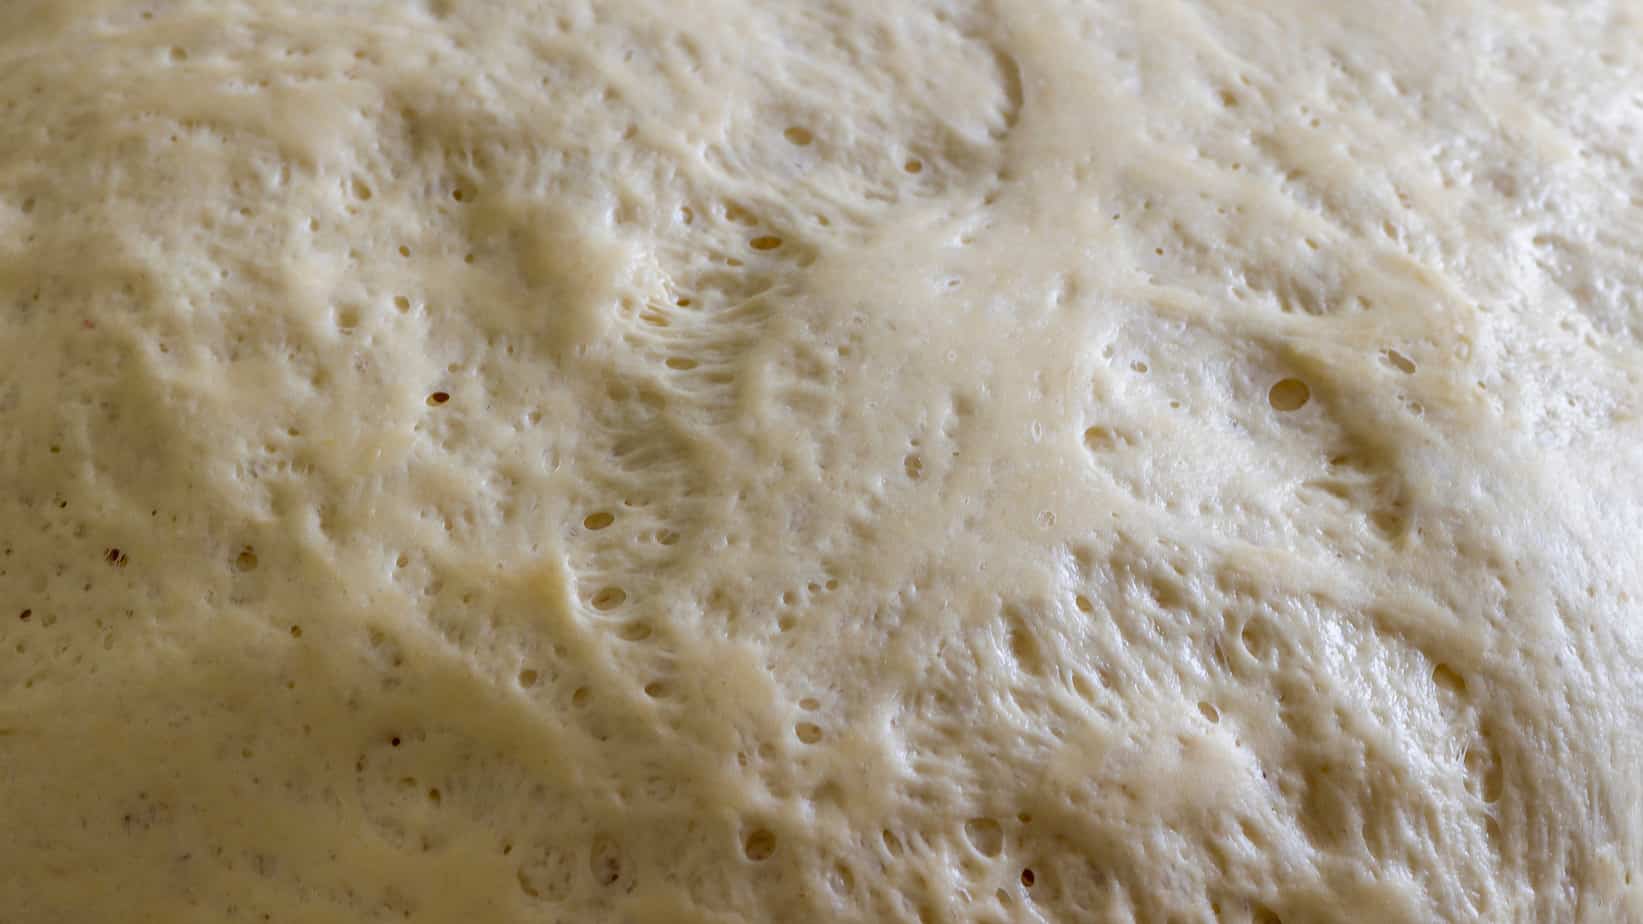 Gluten development in pizza dough